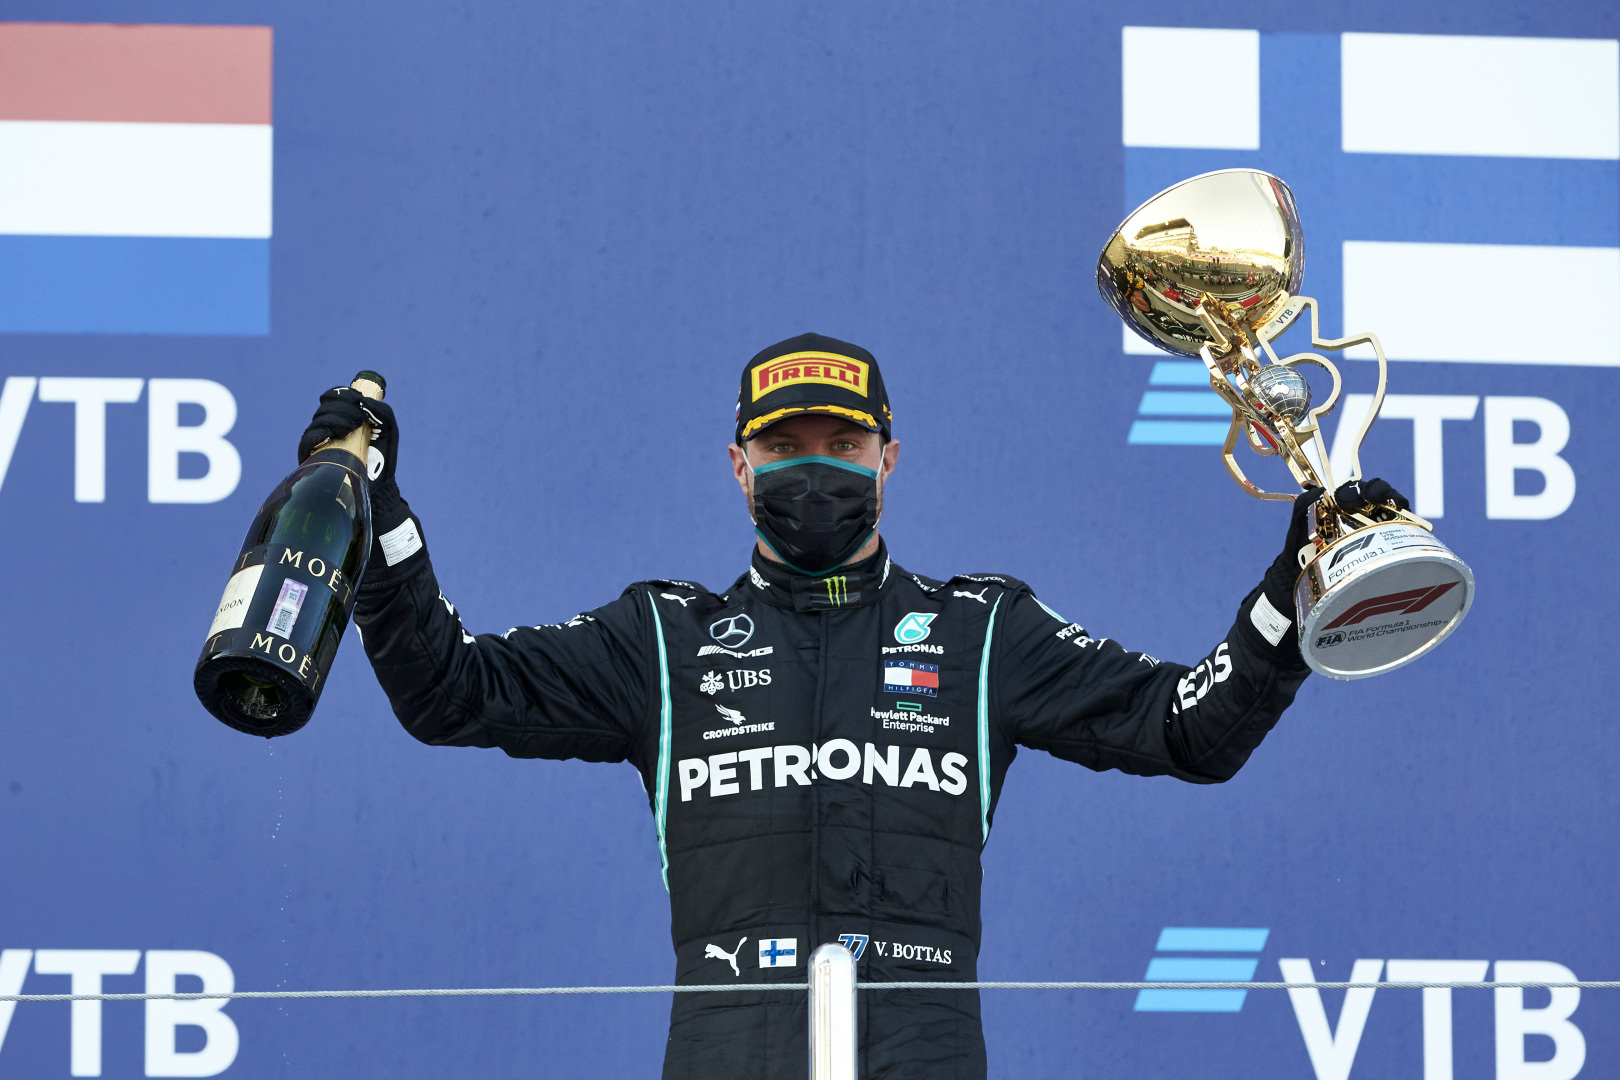 2020 Russian Grand Prix, Valtteri Bottas (image courtesy Mercedes-AMG Petronas)